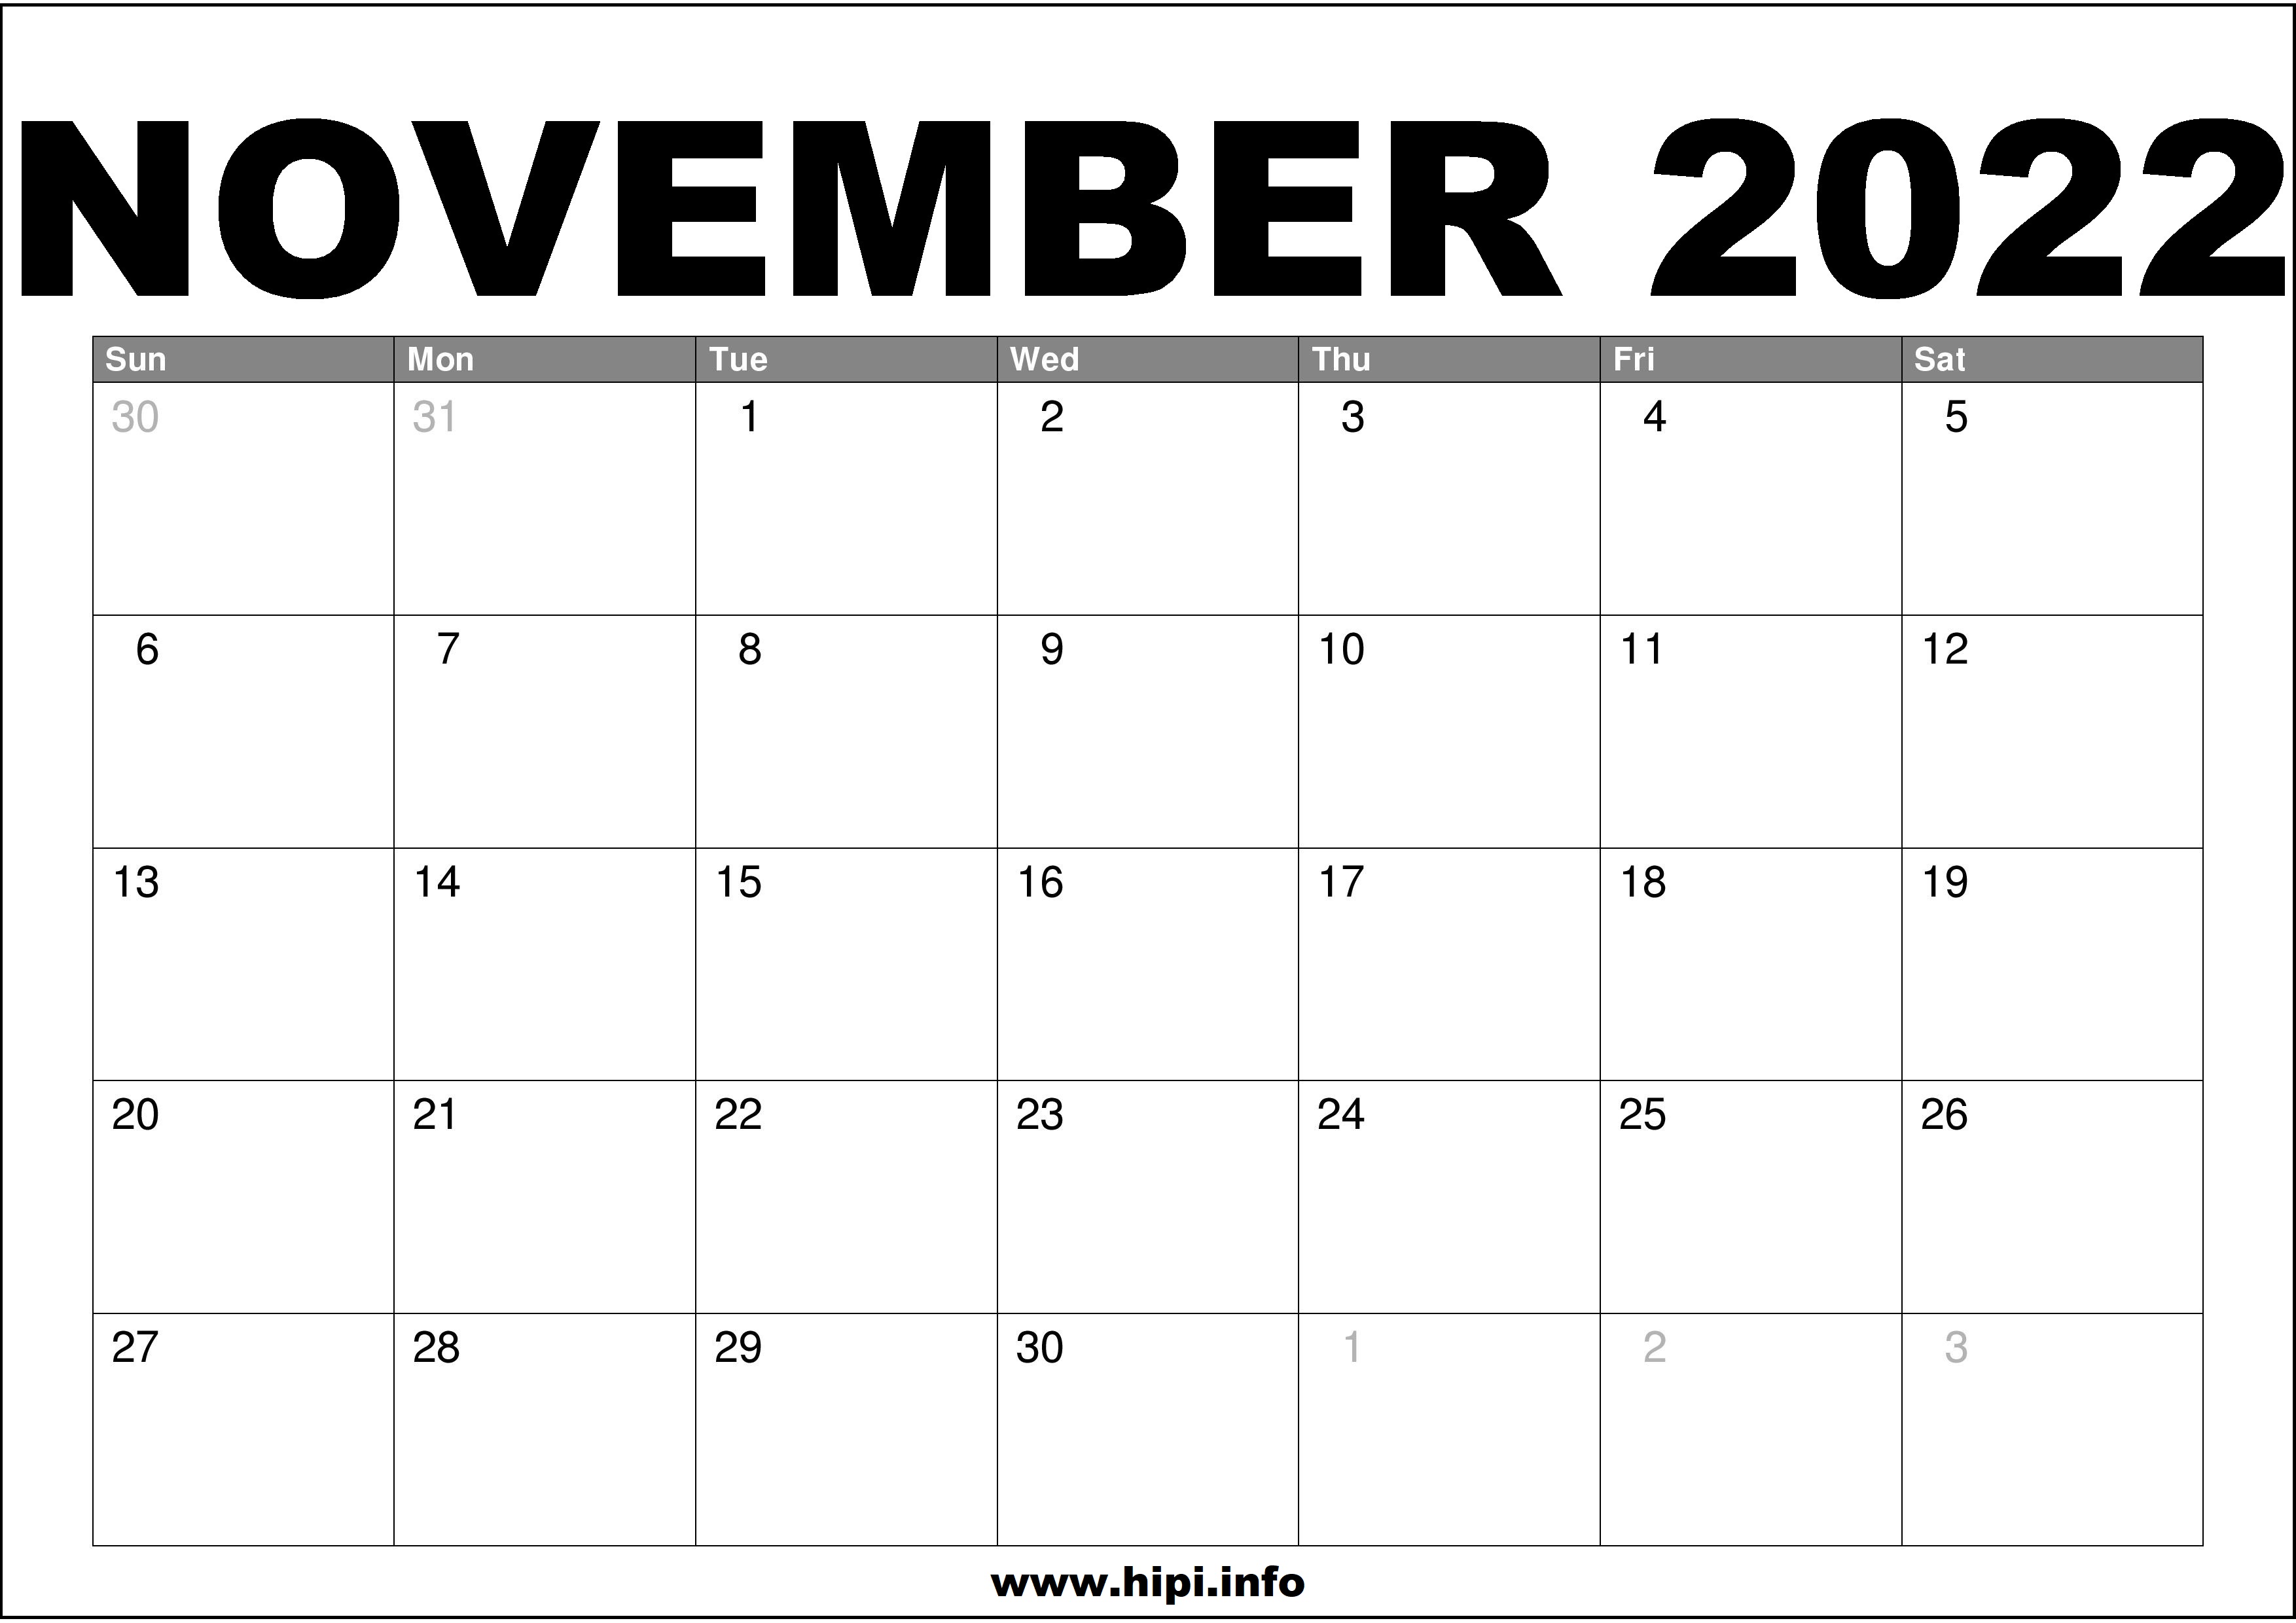 November 2022 Free Printable Calendar November 2022 Calendar Printable Free - Hipi.info | Calendars Printable Free